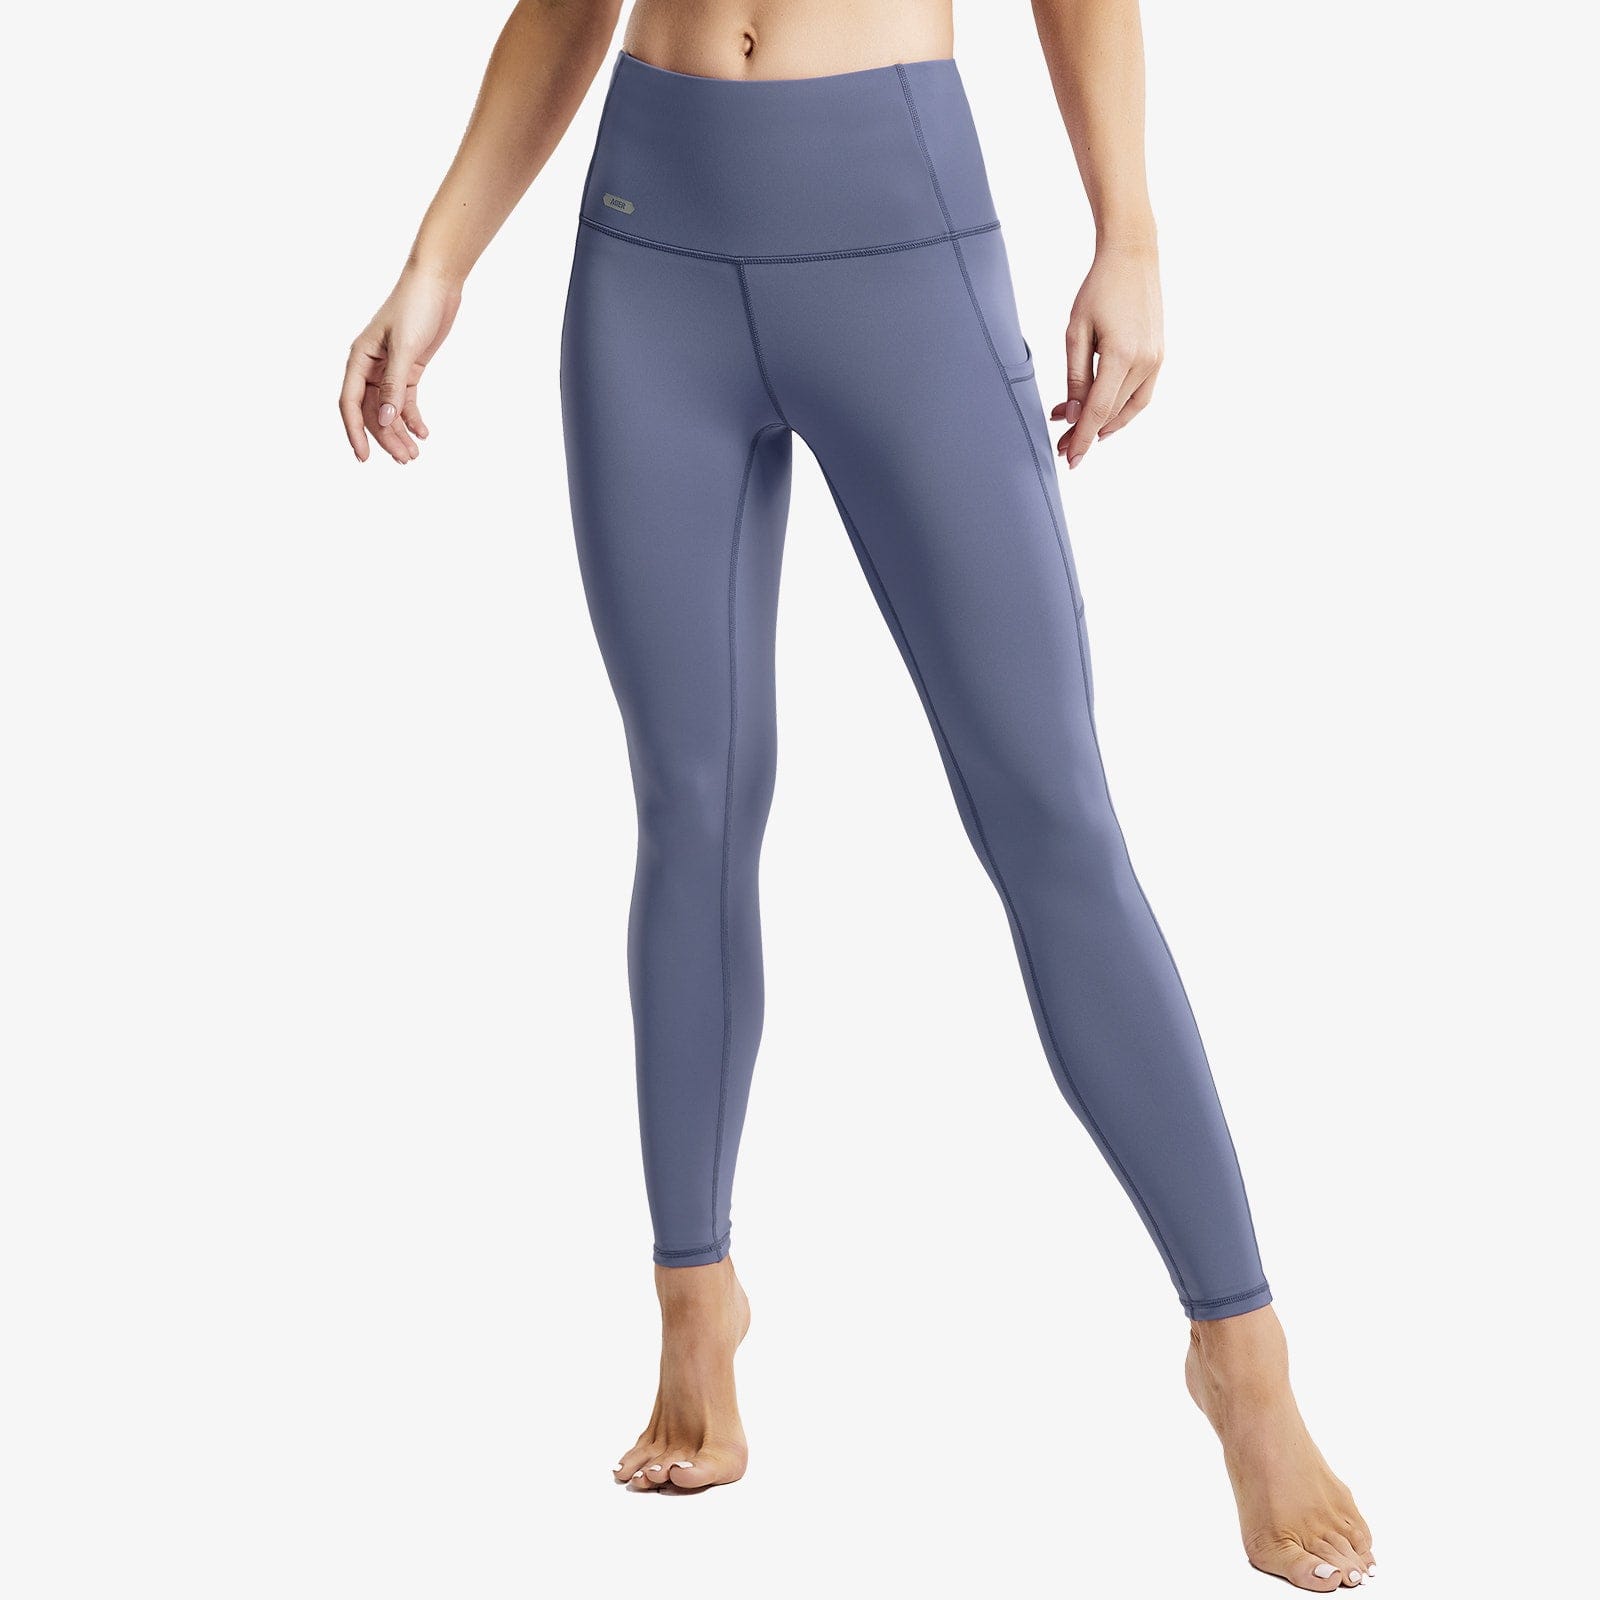 Women's High Waist Yoga Pants with Pockets, Full Length - Dark Dusty Blue /  S